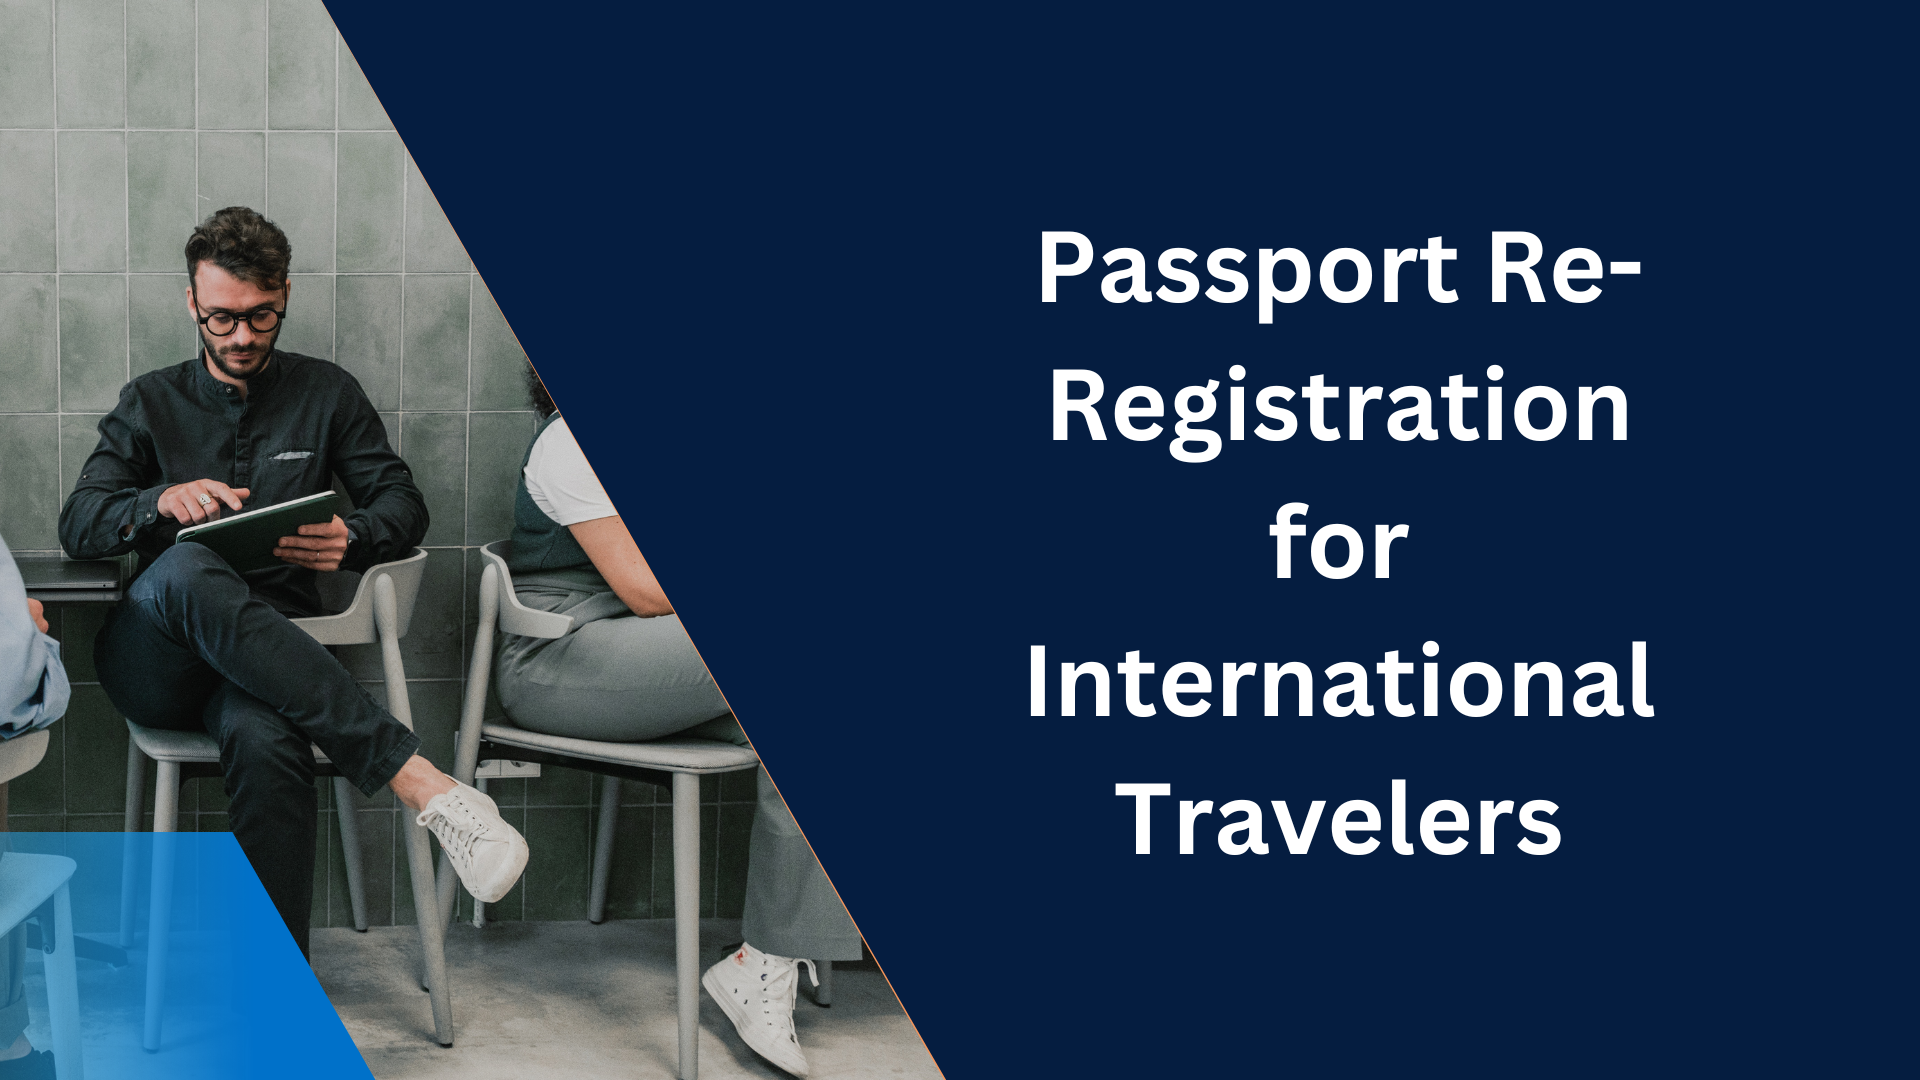 Passport Re-Registration for International Travelers